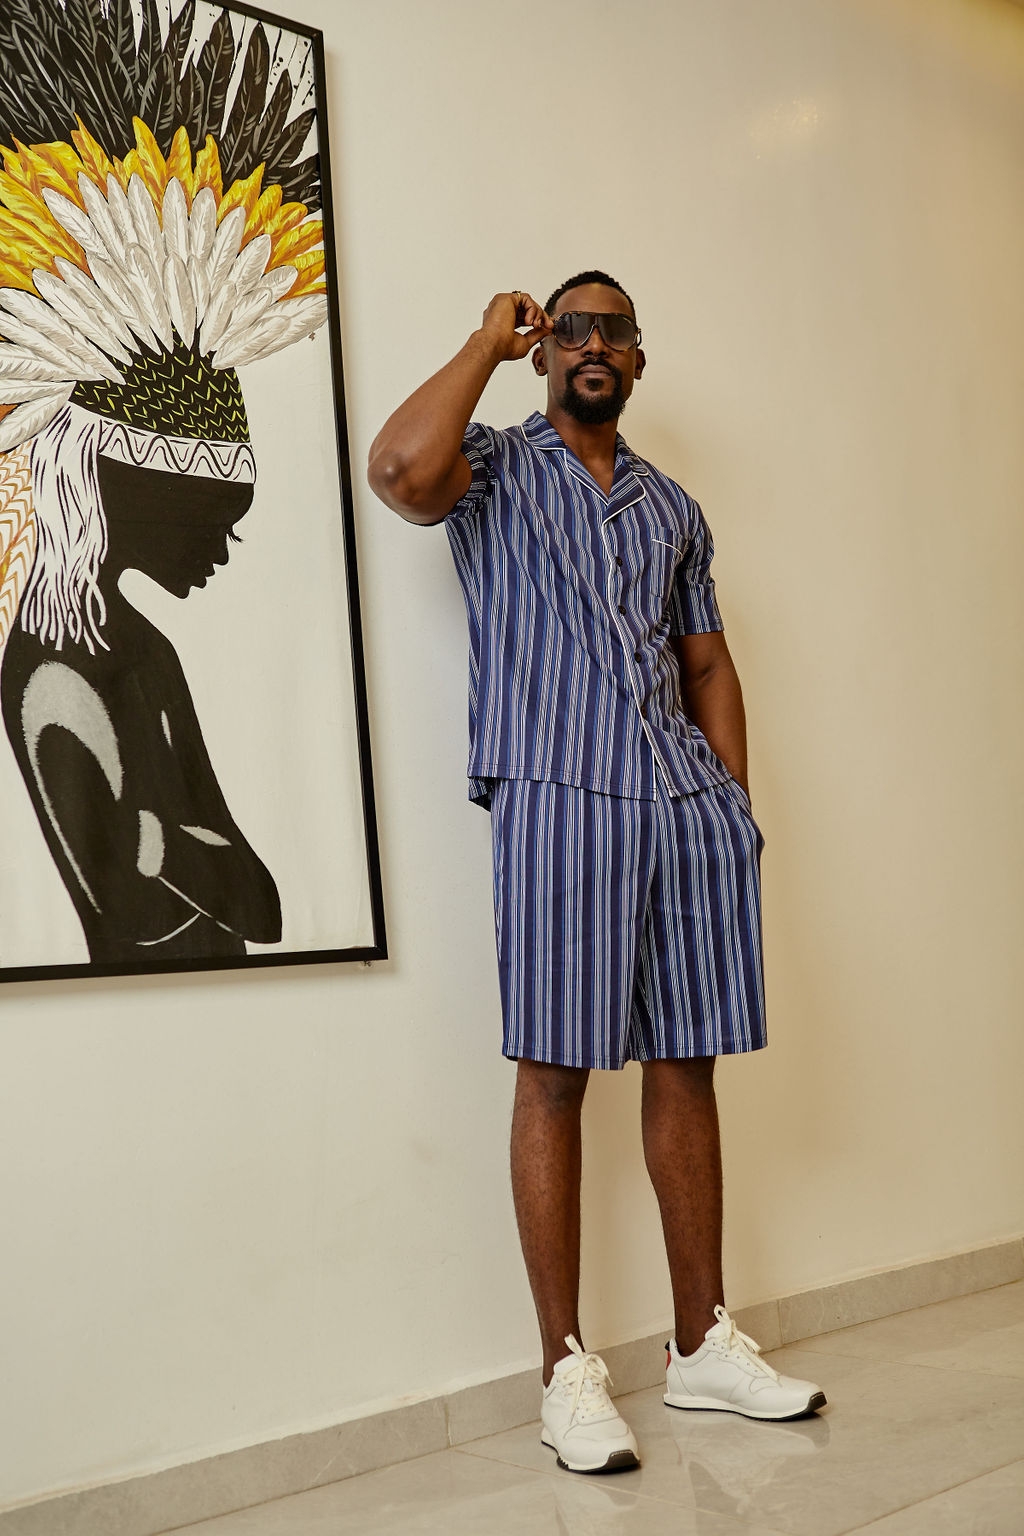 Mawuli Gavor Stars In David Wej’s “Grooming The Modern Man” Styling Series